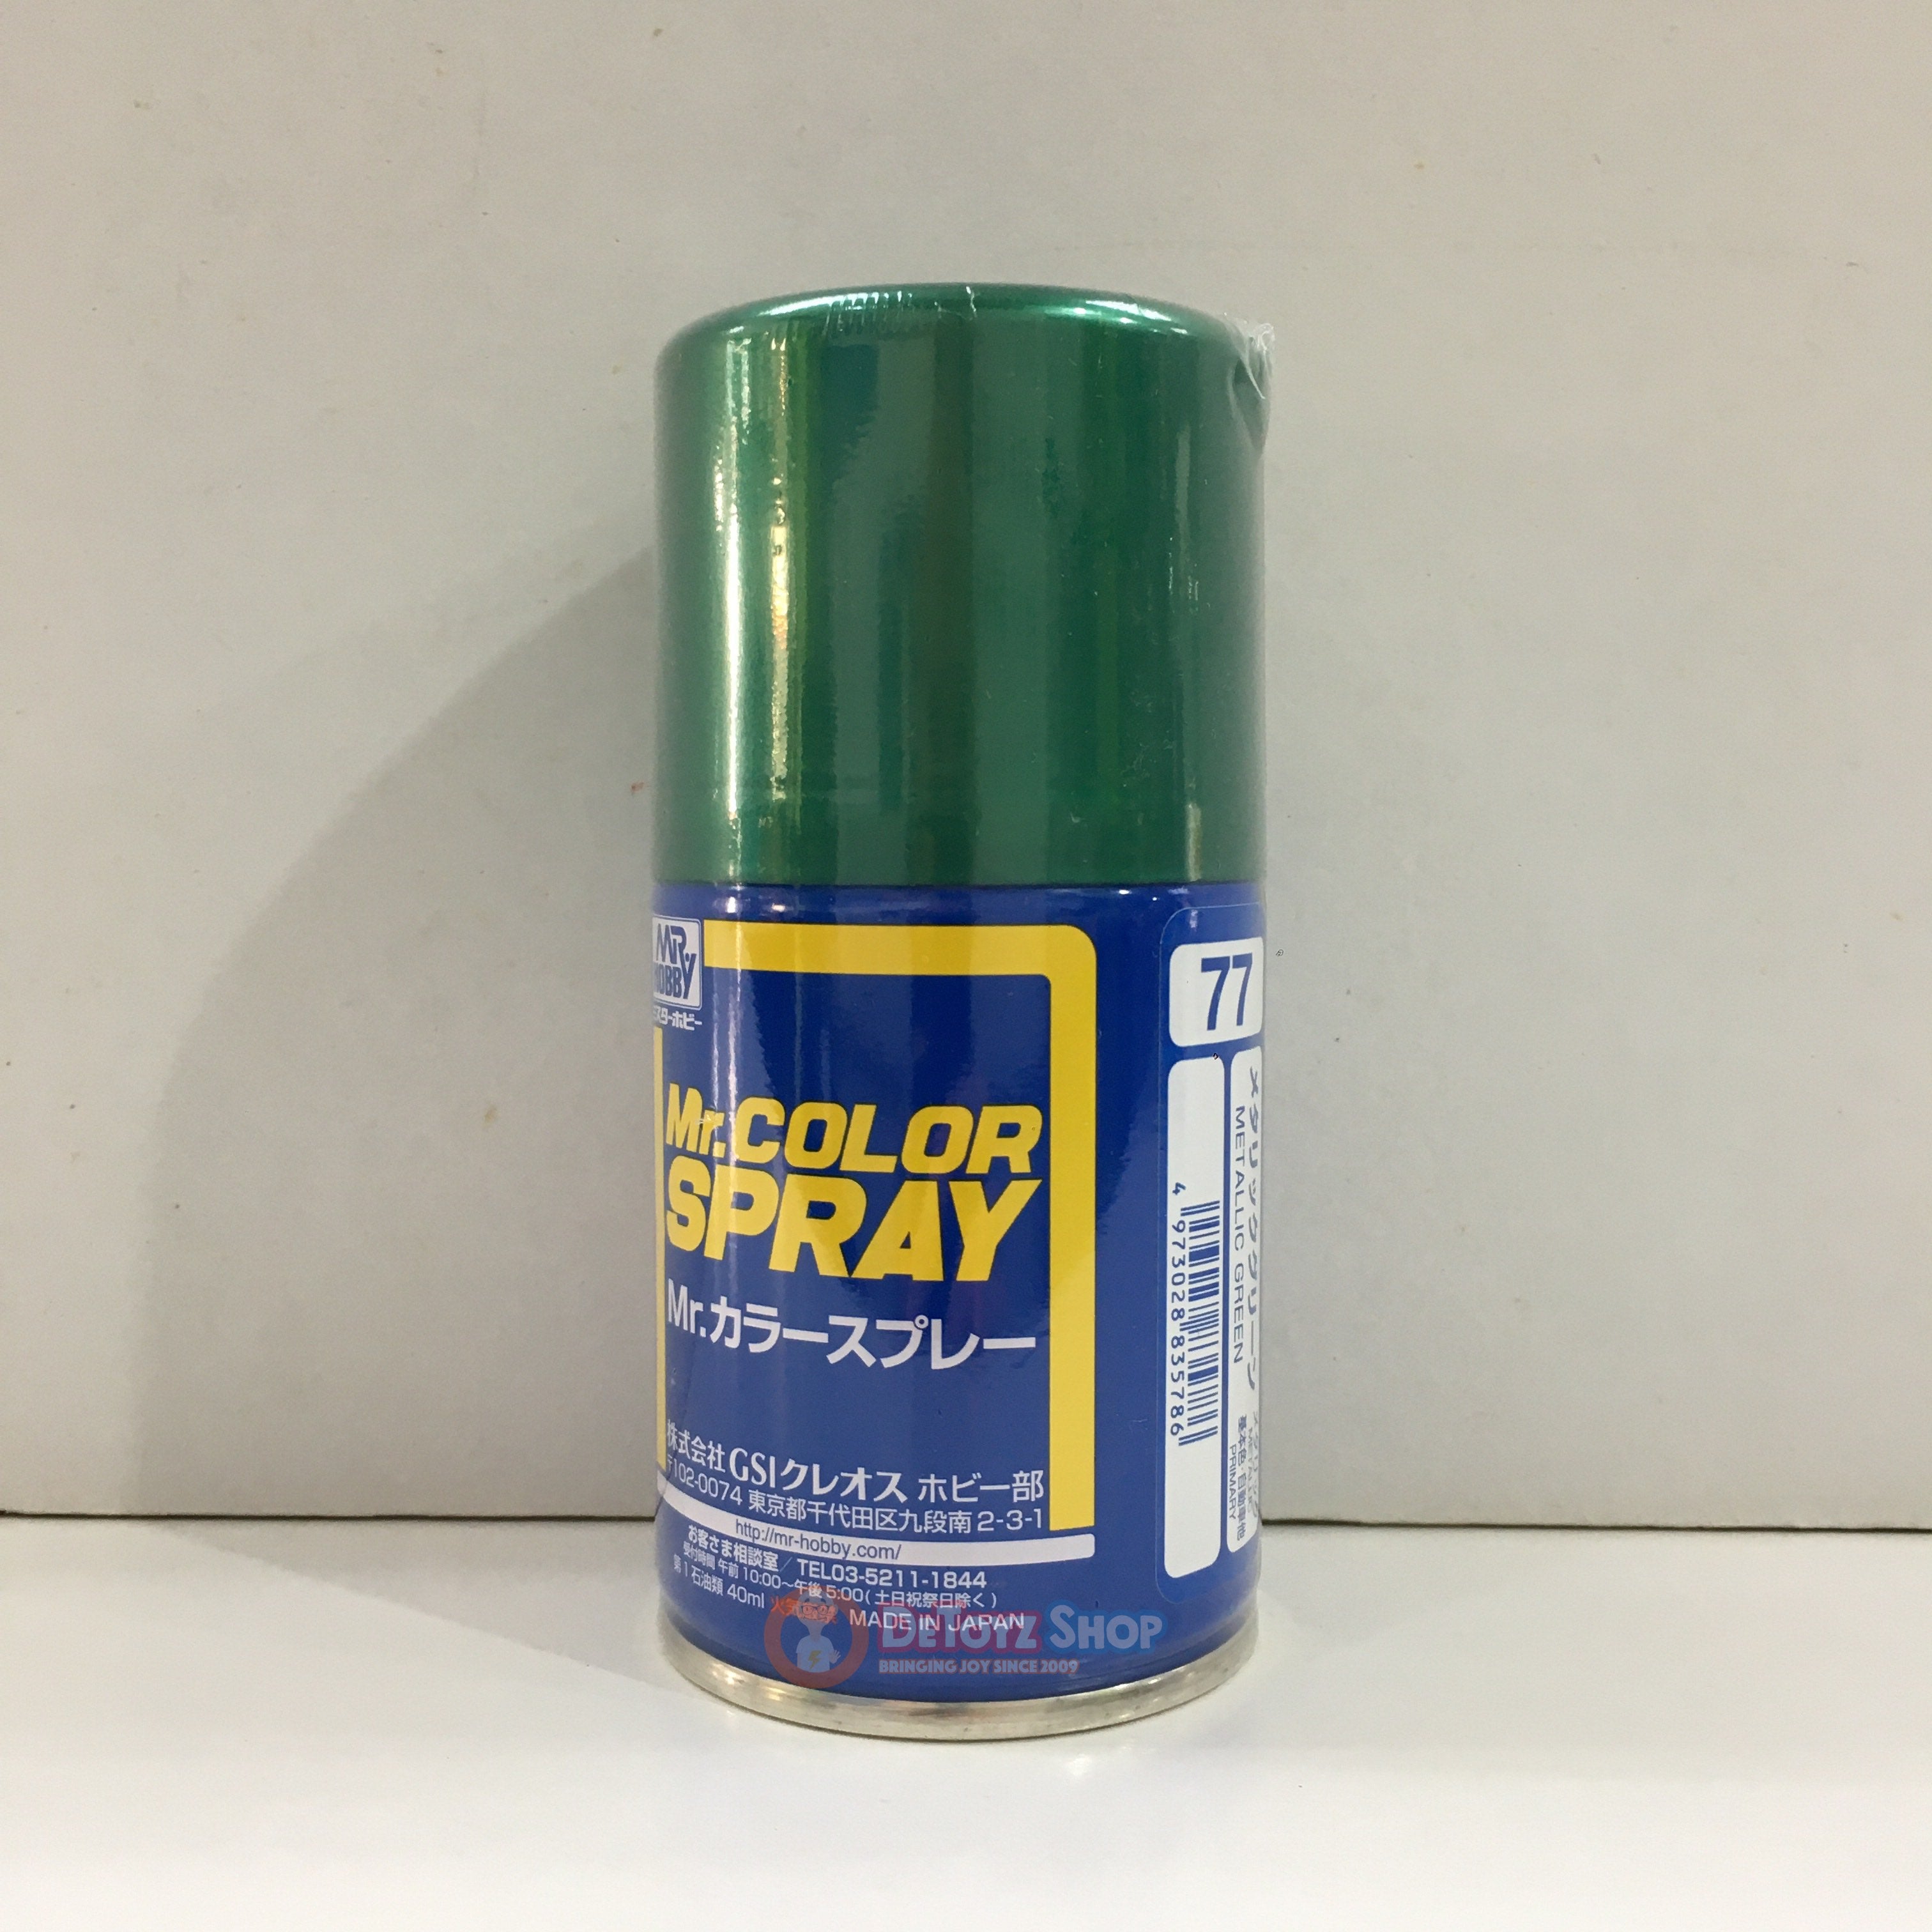 Mr Color Spray S-77 Metallic Green